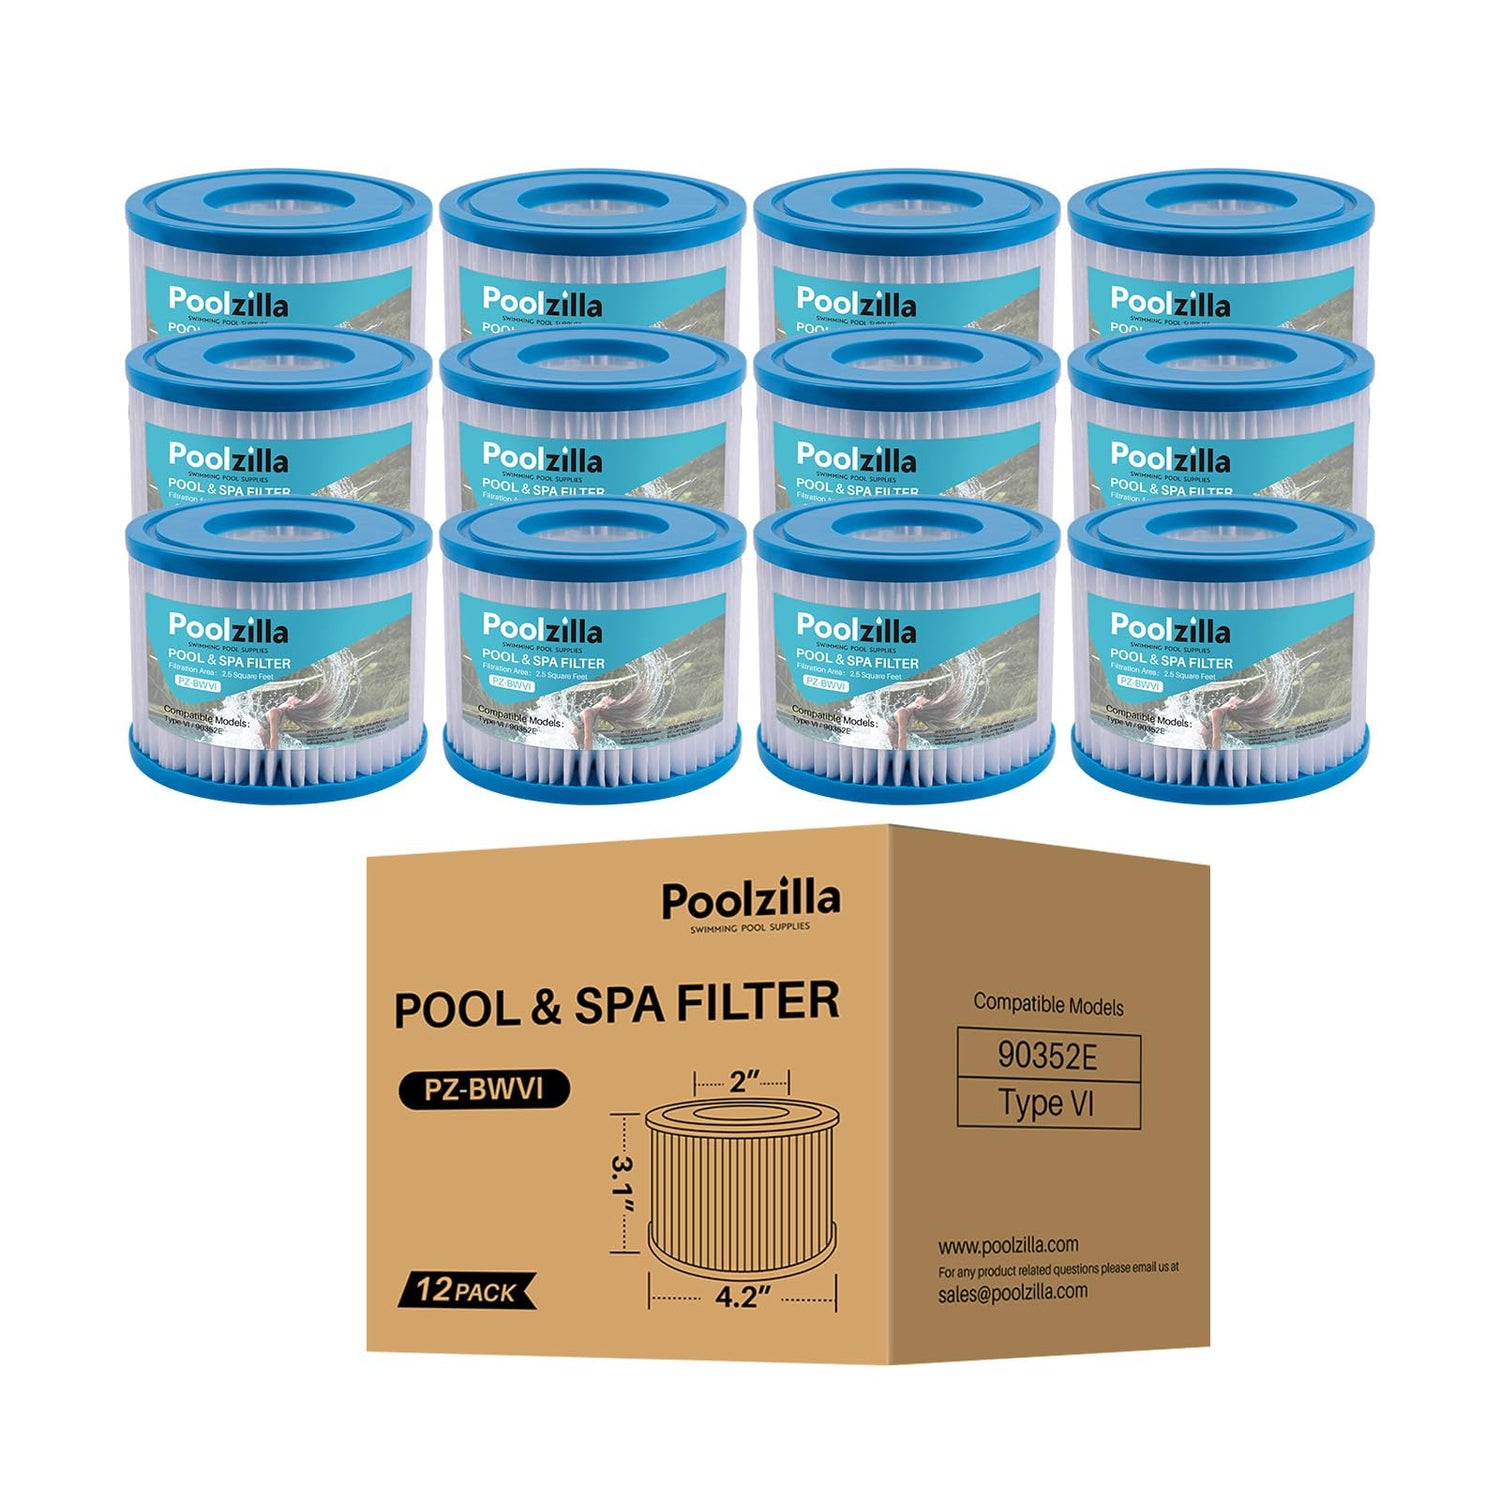 Poolzilla  Spa Filter Cartridge | Bestway Type VI, 29001E, Coleman SaluSpa 90352E, 58323E, 58323, 58324,SUNSET FILTERS VI, Volca Spares Size VI, Lay-Z Spa | 12-Pack